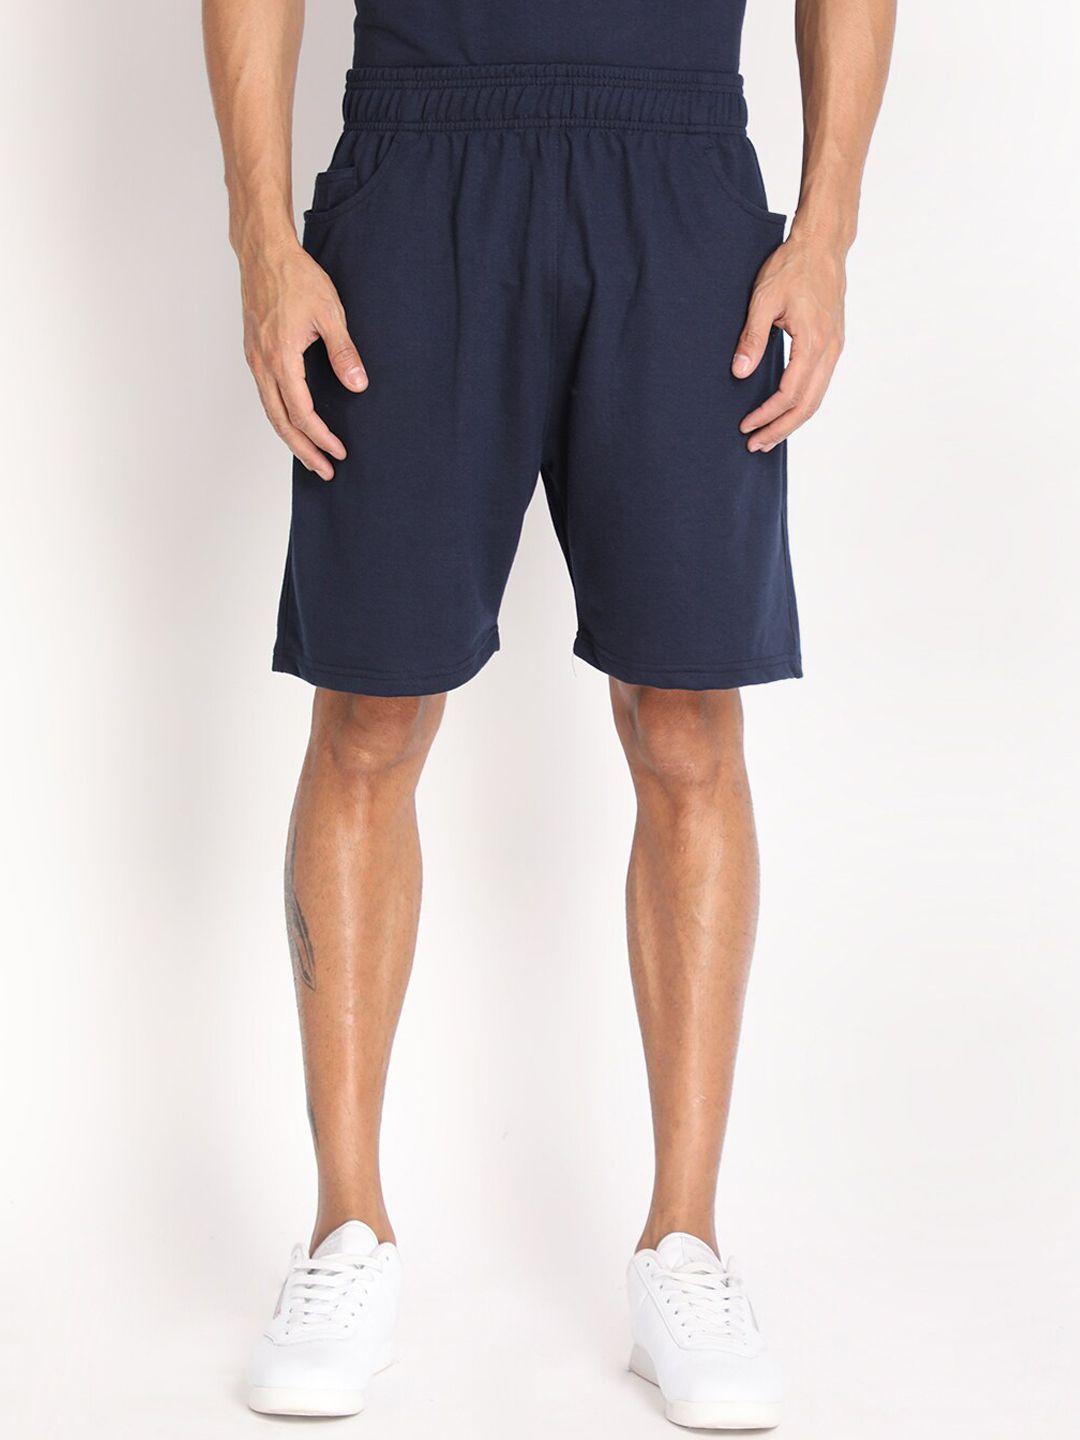 chkokko men navy blue outdoor sports shorts